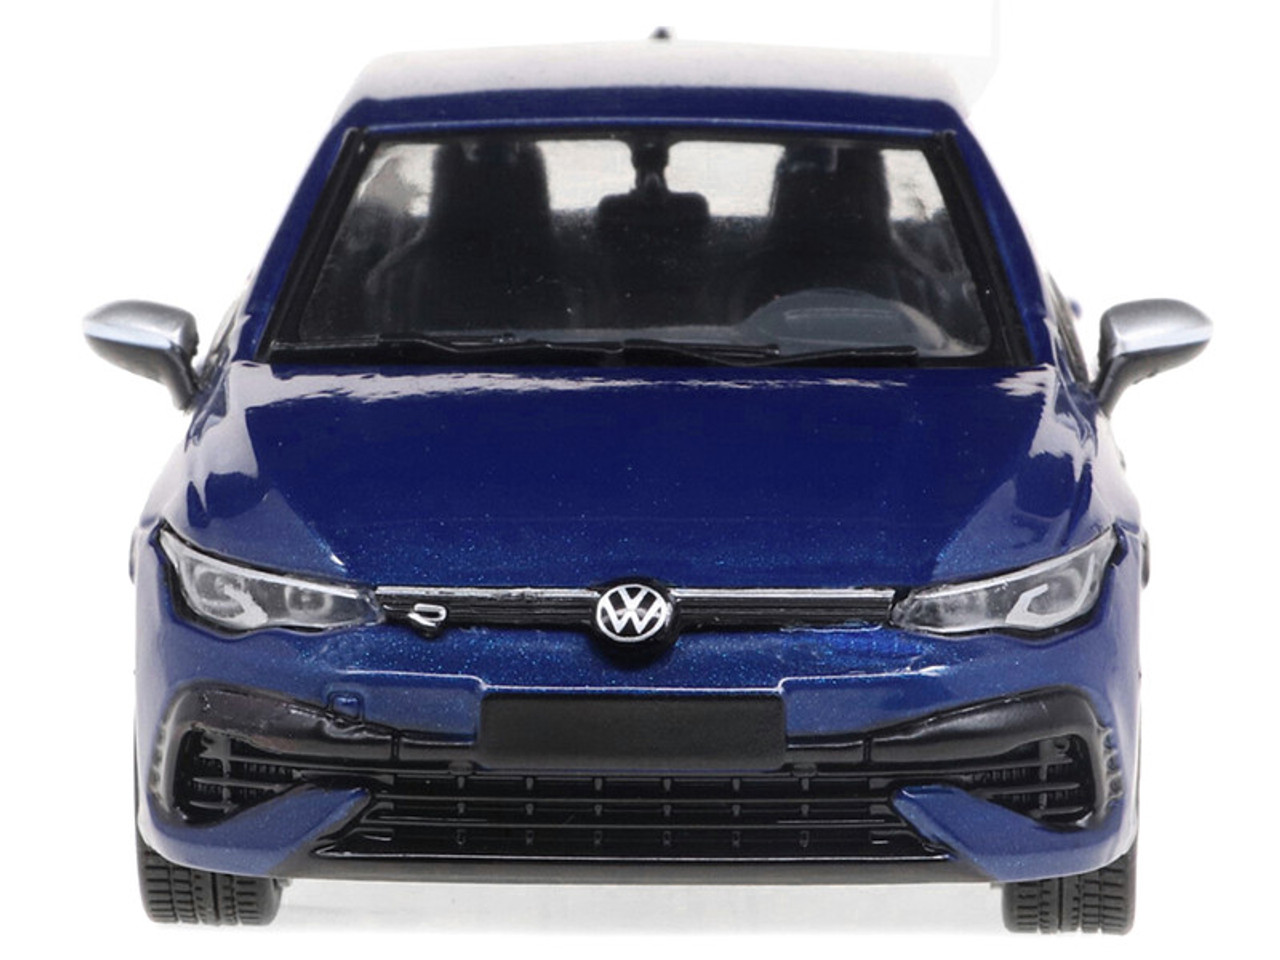 1/43 Solido 2021 Volkswagen VW Golf VIII R 2.0 TSi (Lapiz Blue) Car Model